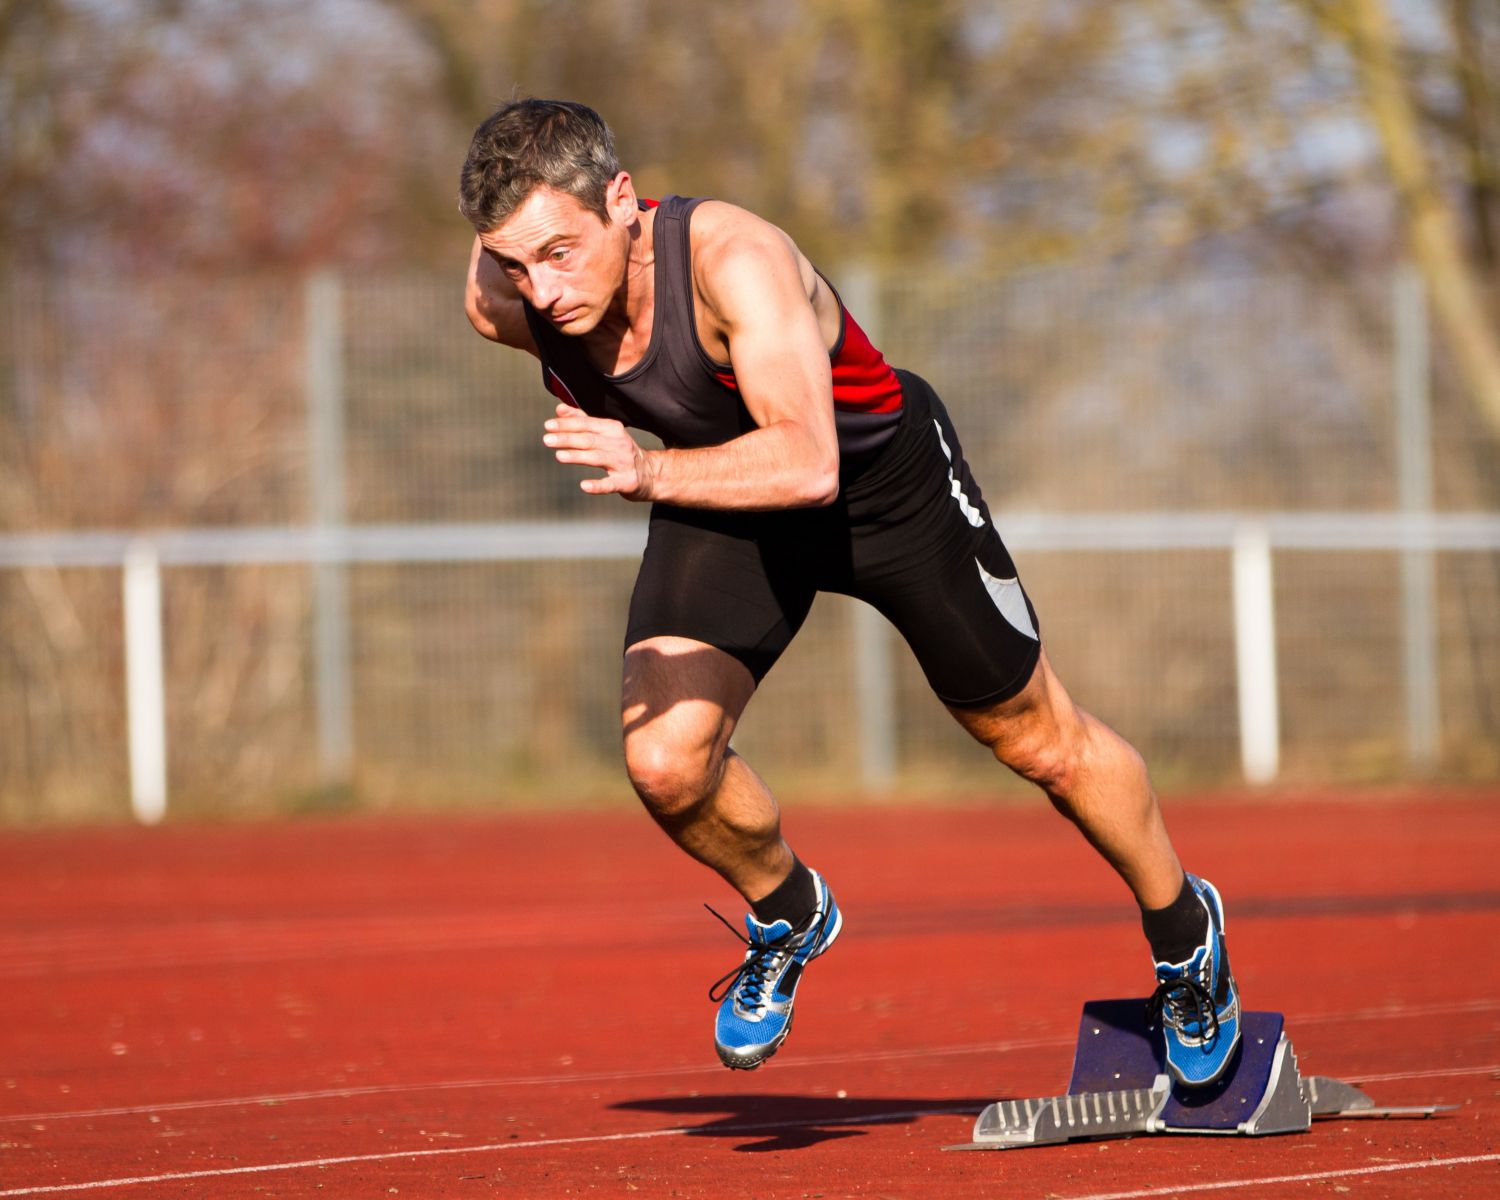 Velocity Based Training For Speedstrength Athlete Training And Health